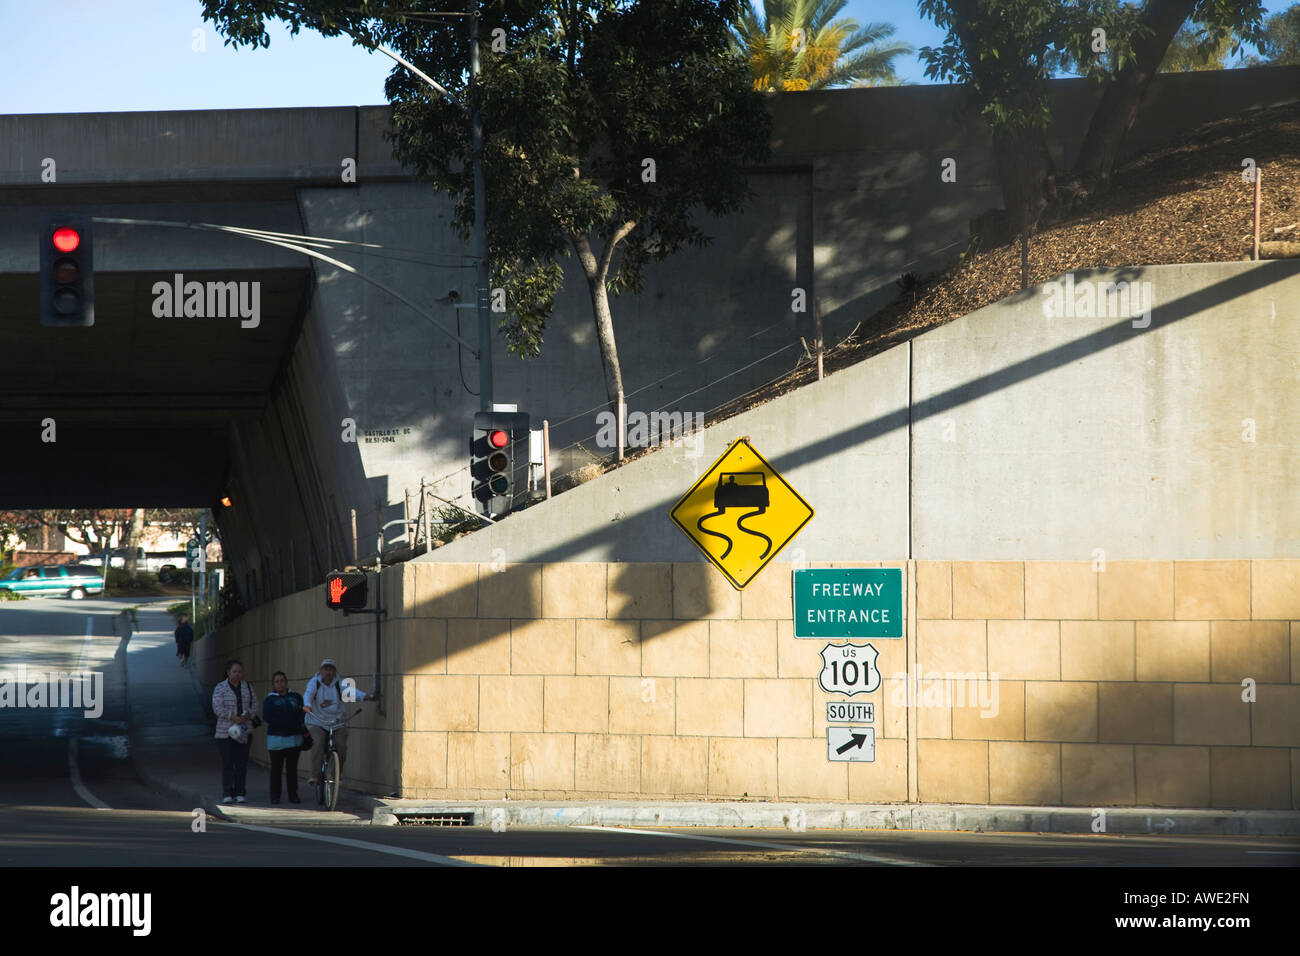 CALIFORNIA Santa Barbara Freeway entrance sign to highway man on bicycle pushing walk signal traffic lights Stock Photo